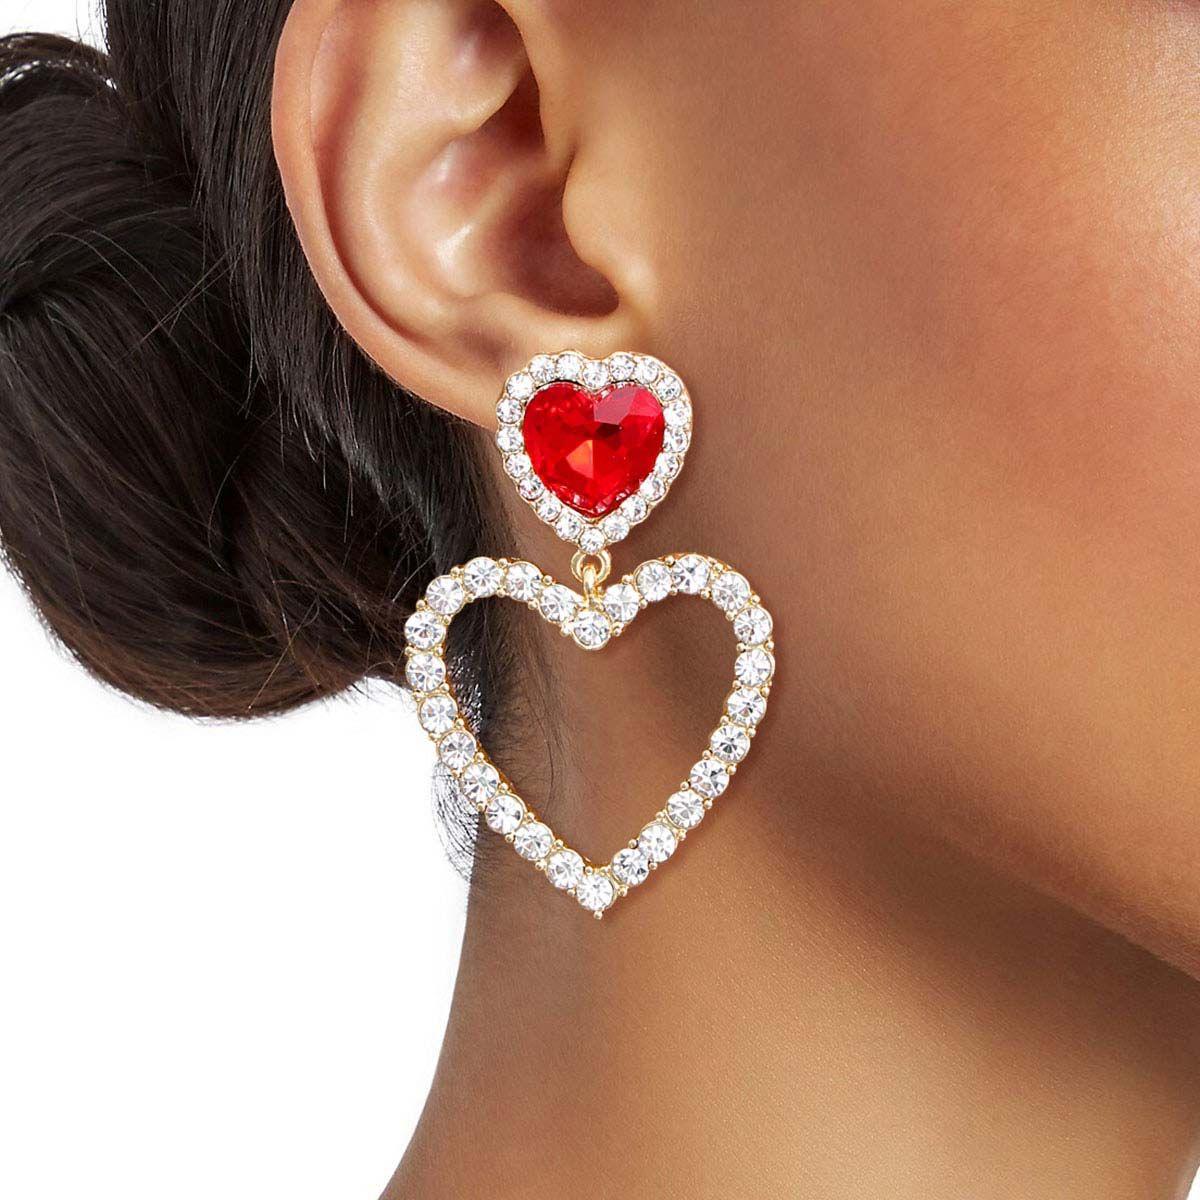 Red Heart Stud Earrings Dangle Open Love Gold Plated